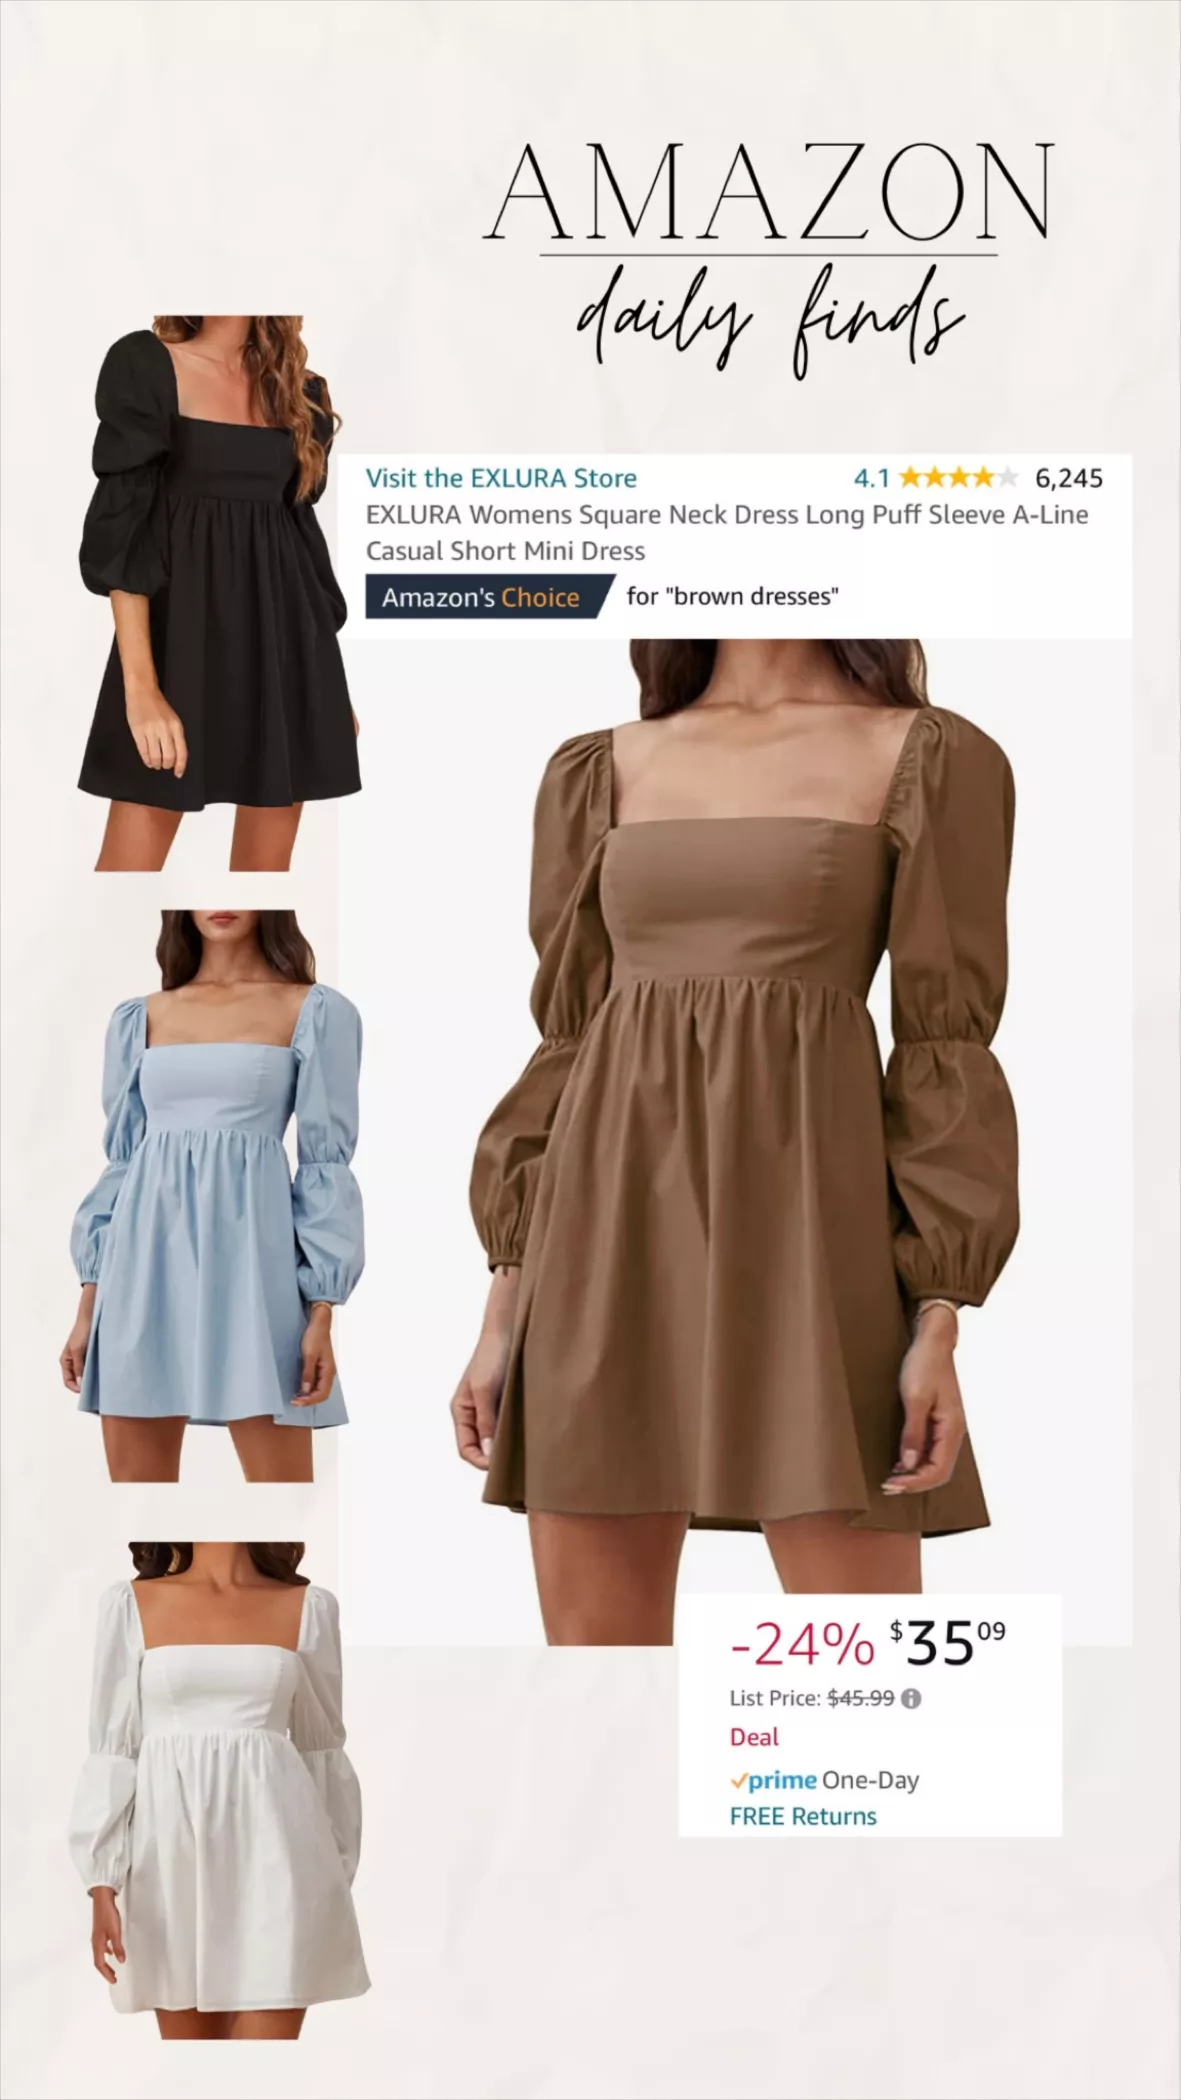 Square Neck Dress Long Puff Sleeve A-Line Casual Short Mini Dress